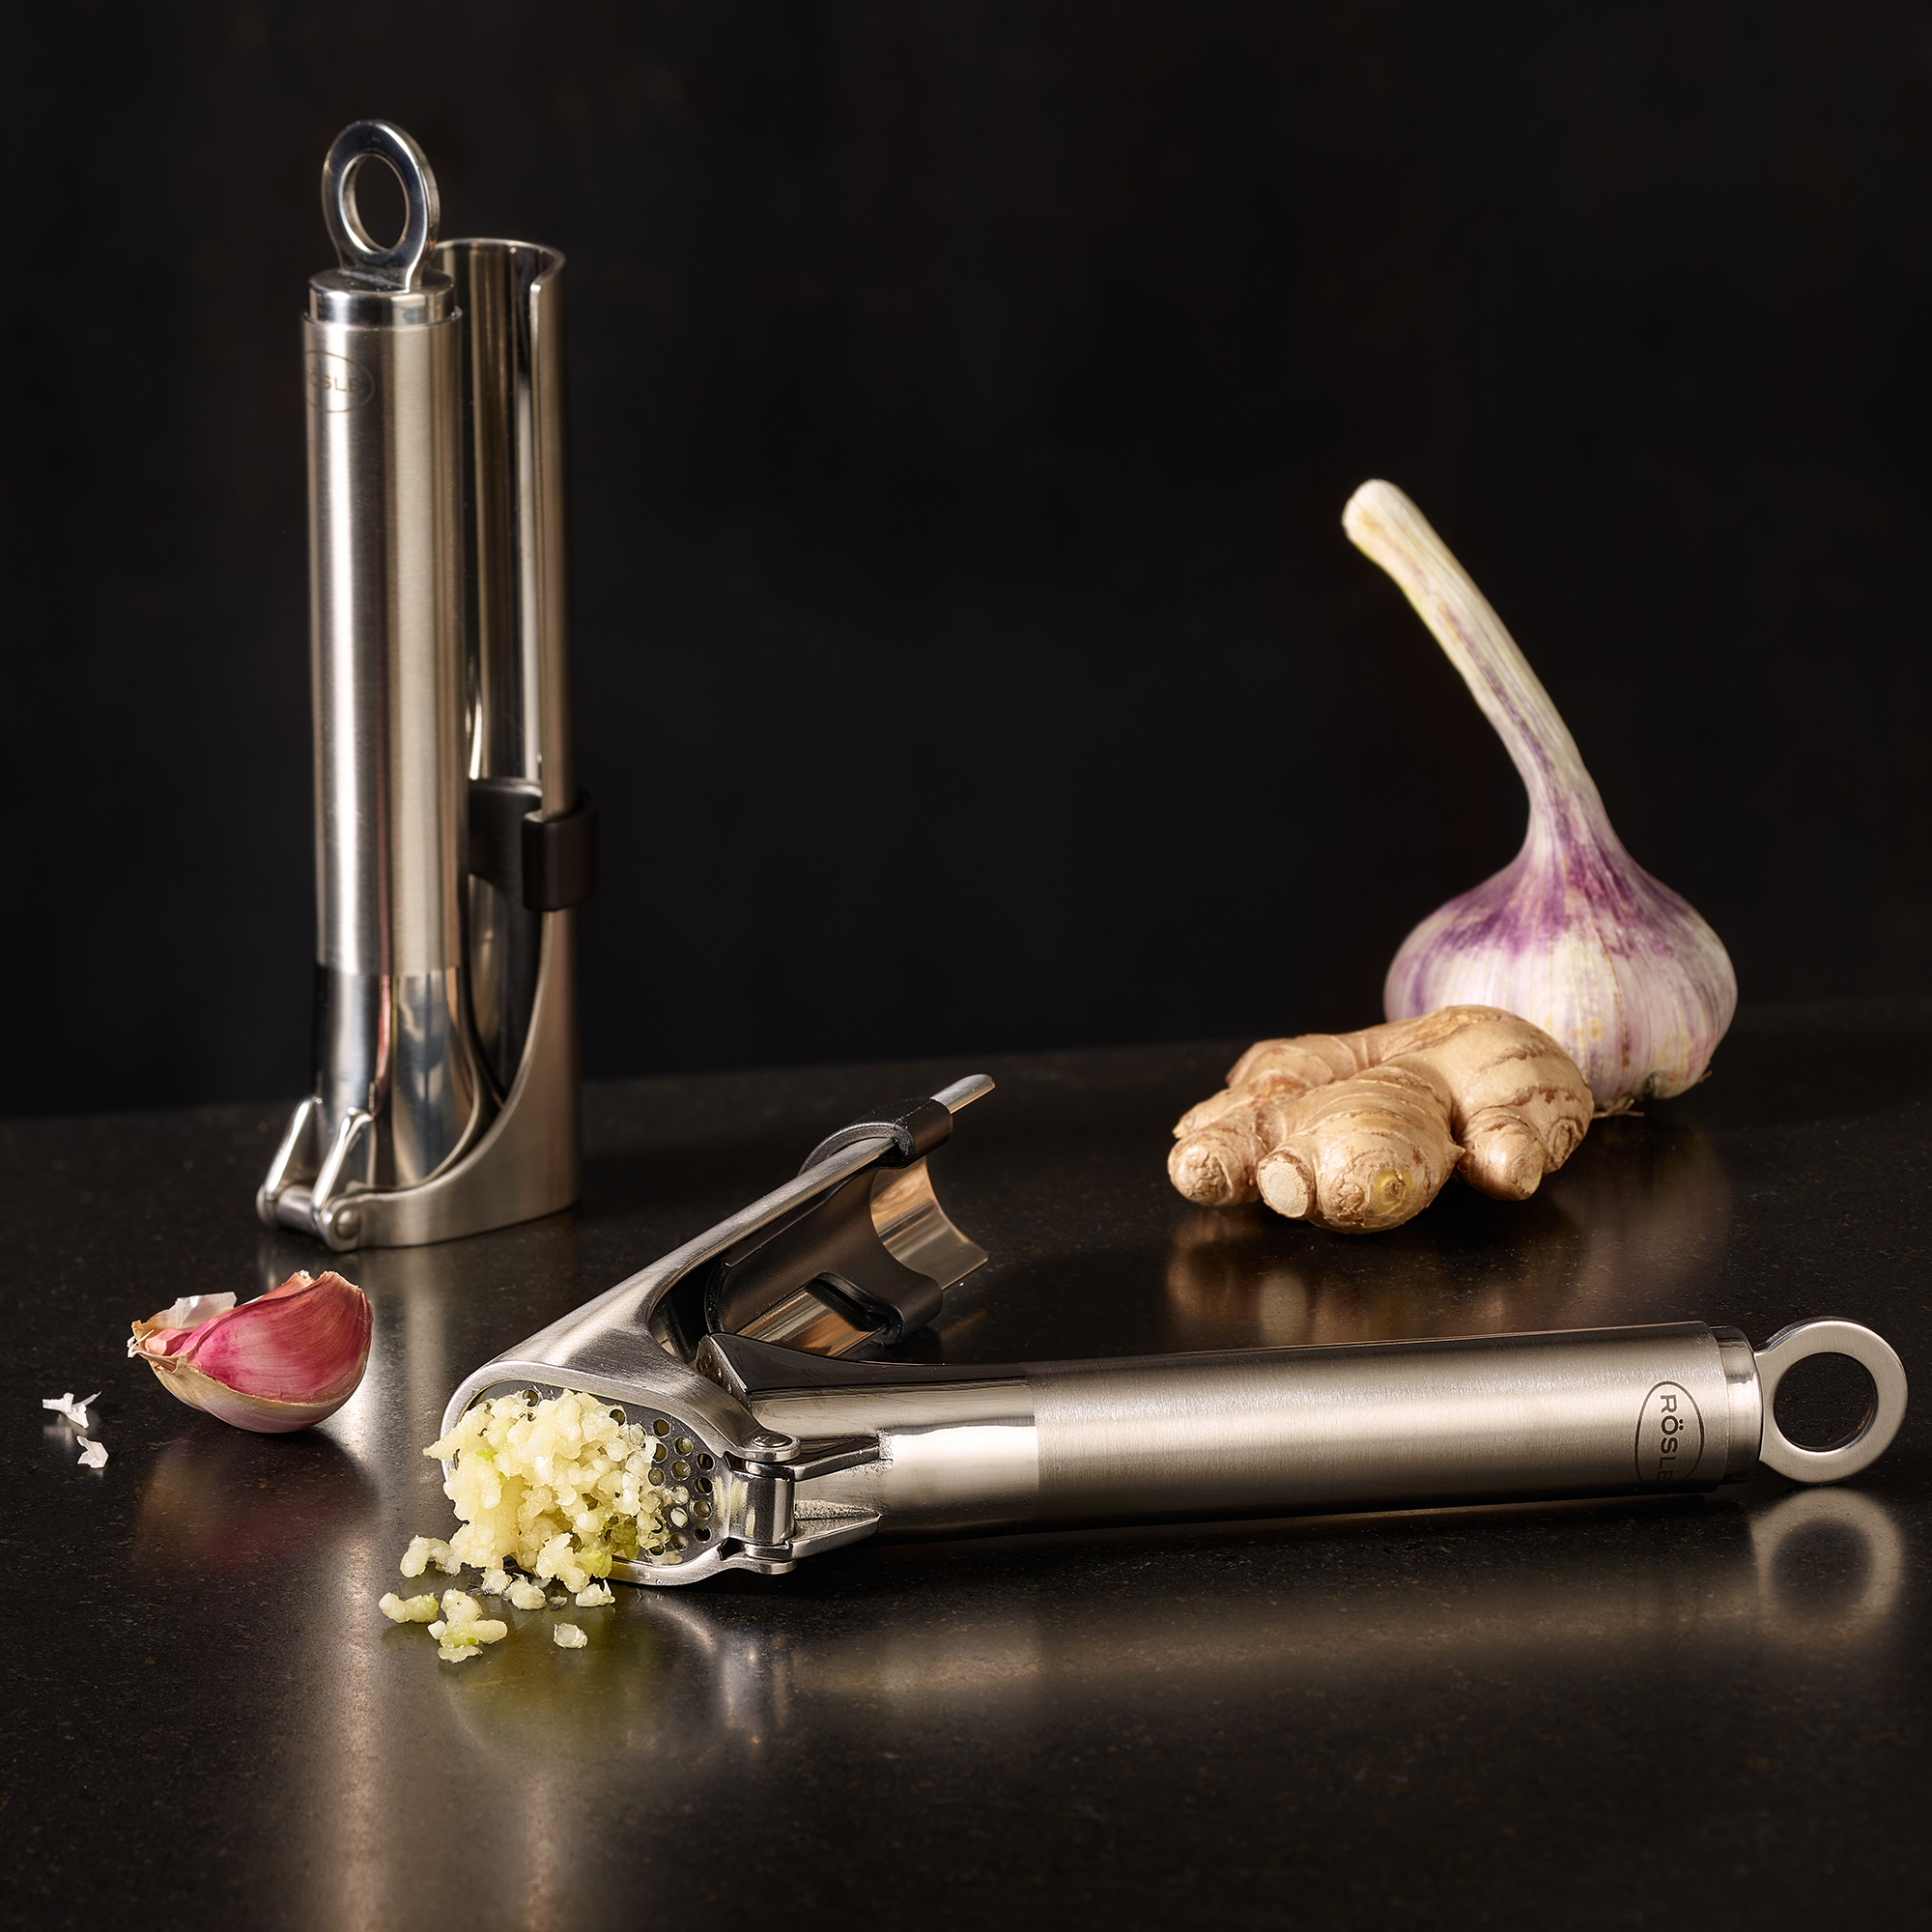 Rösle Garlic Press, Garlic Tools